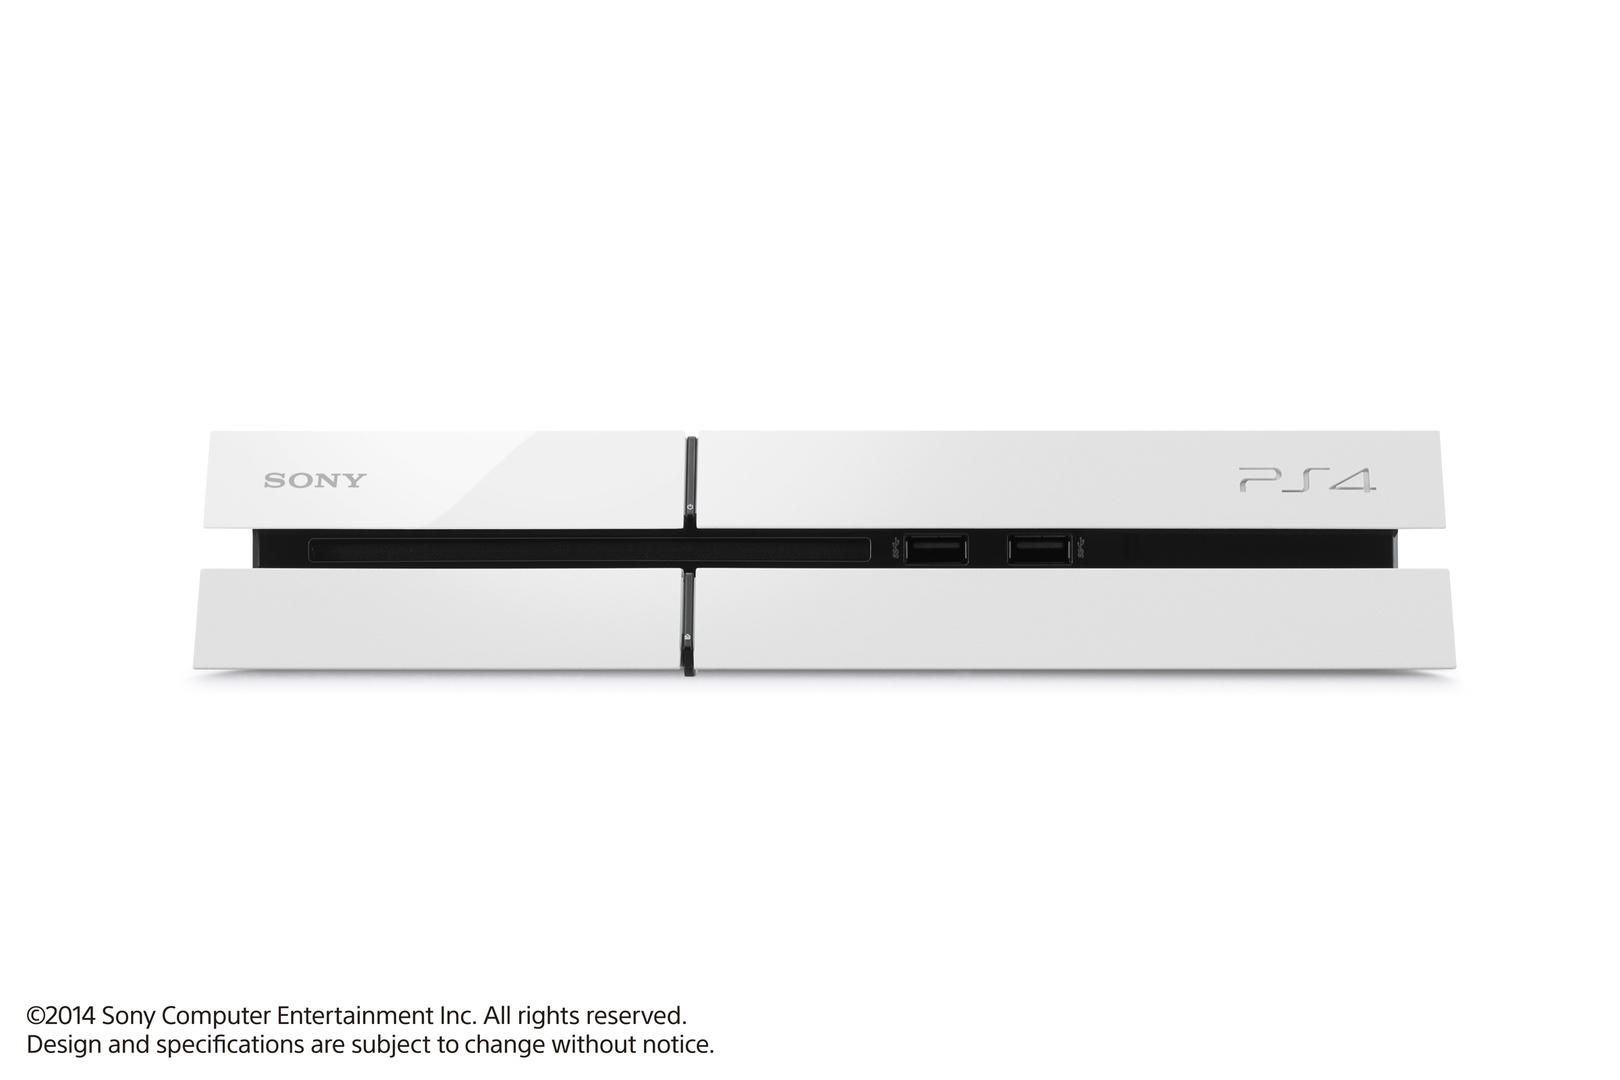 PlayStation 4 (500GB, Glacier White)